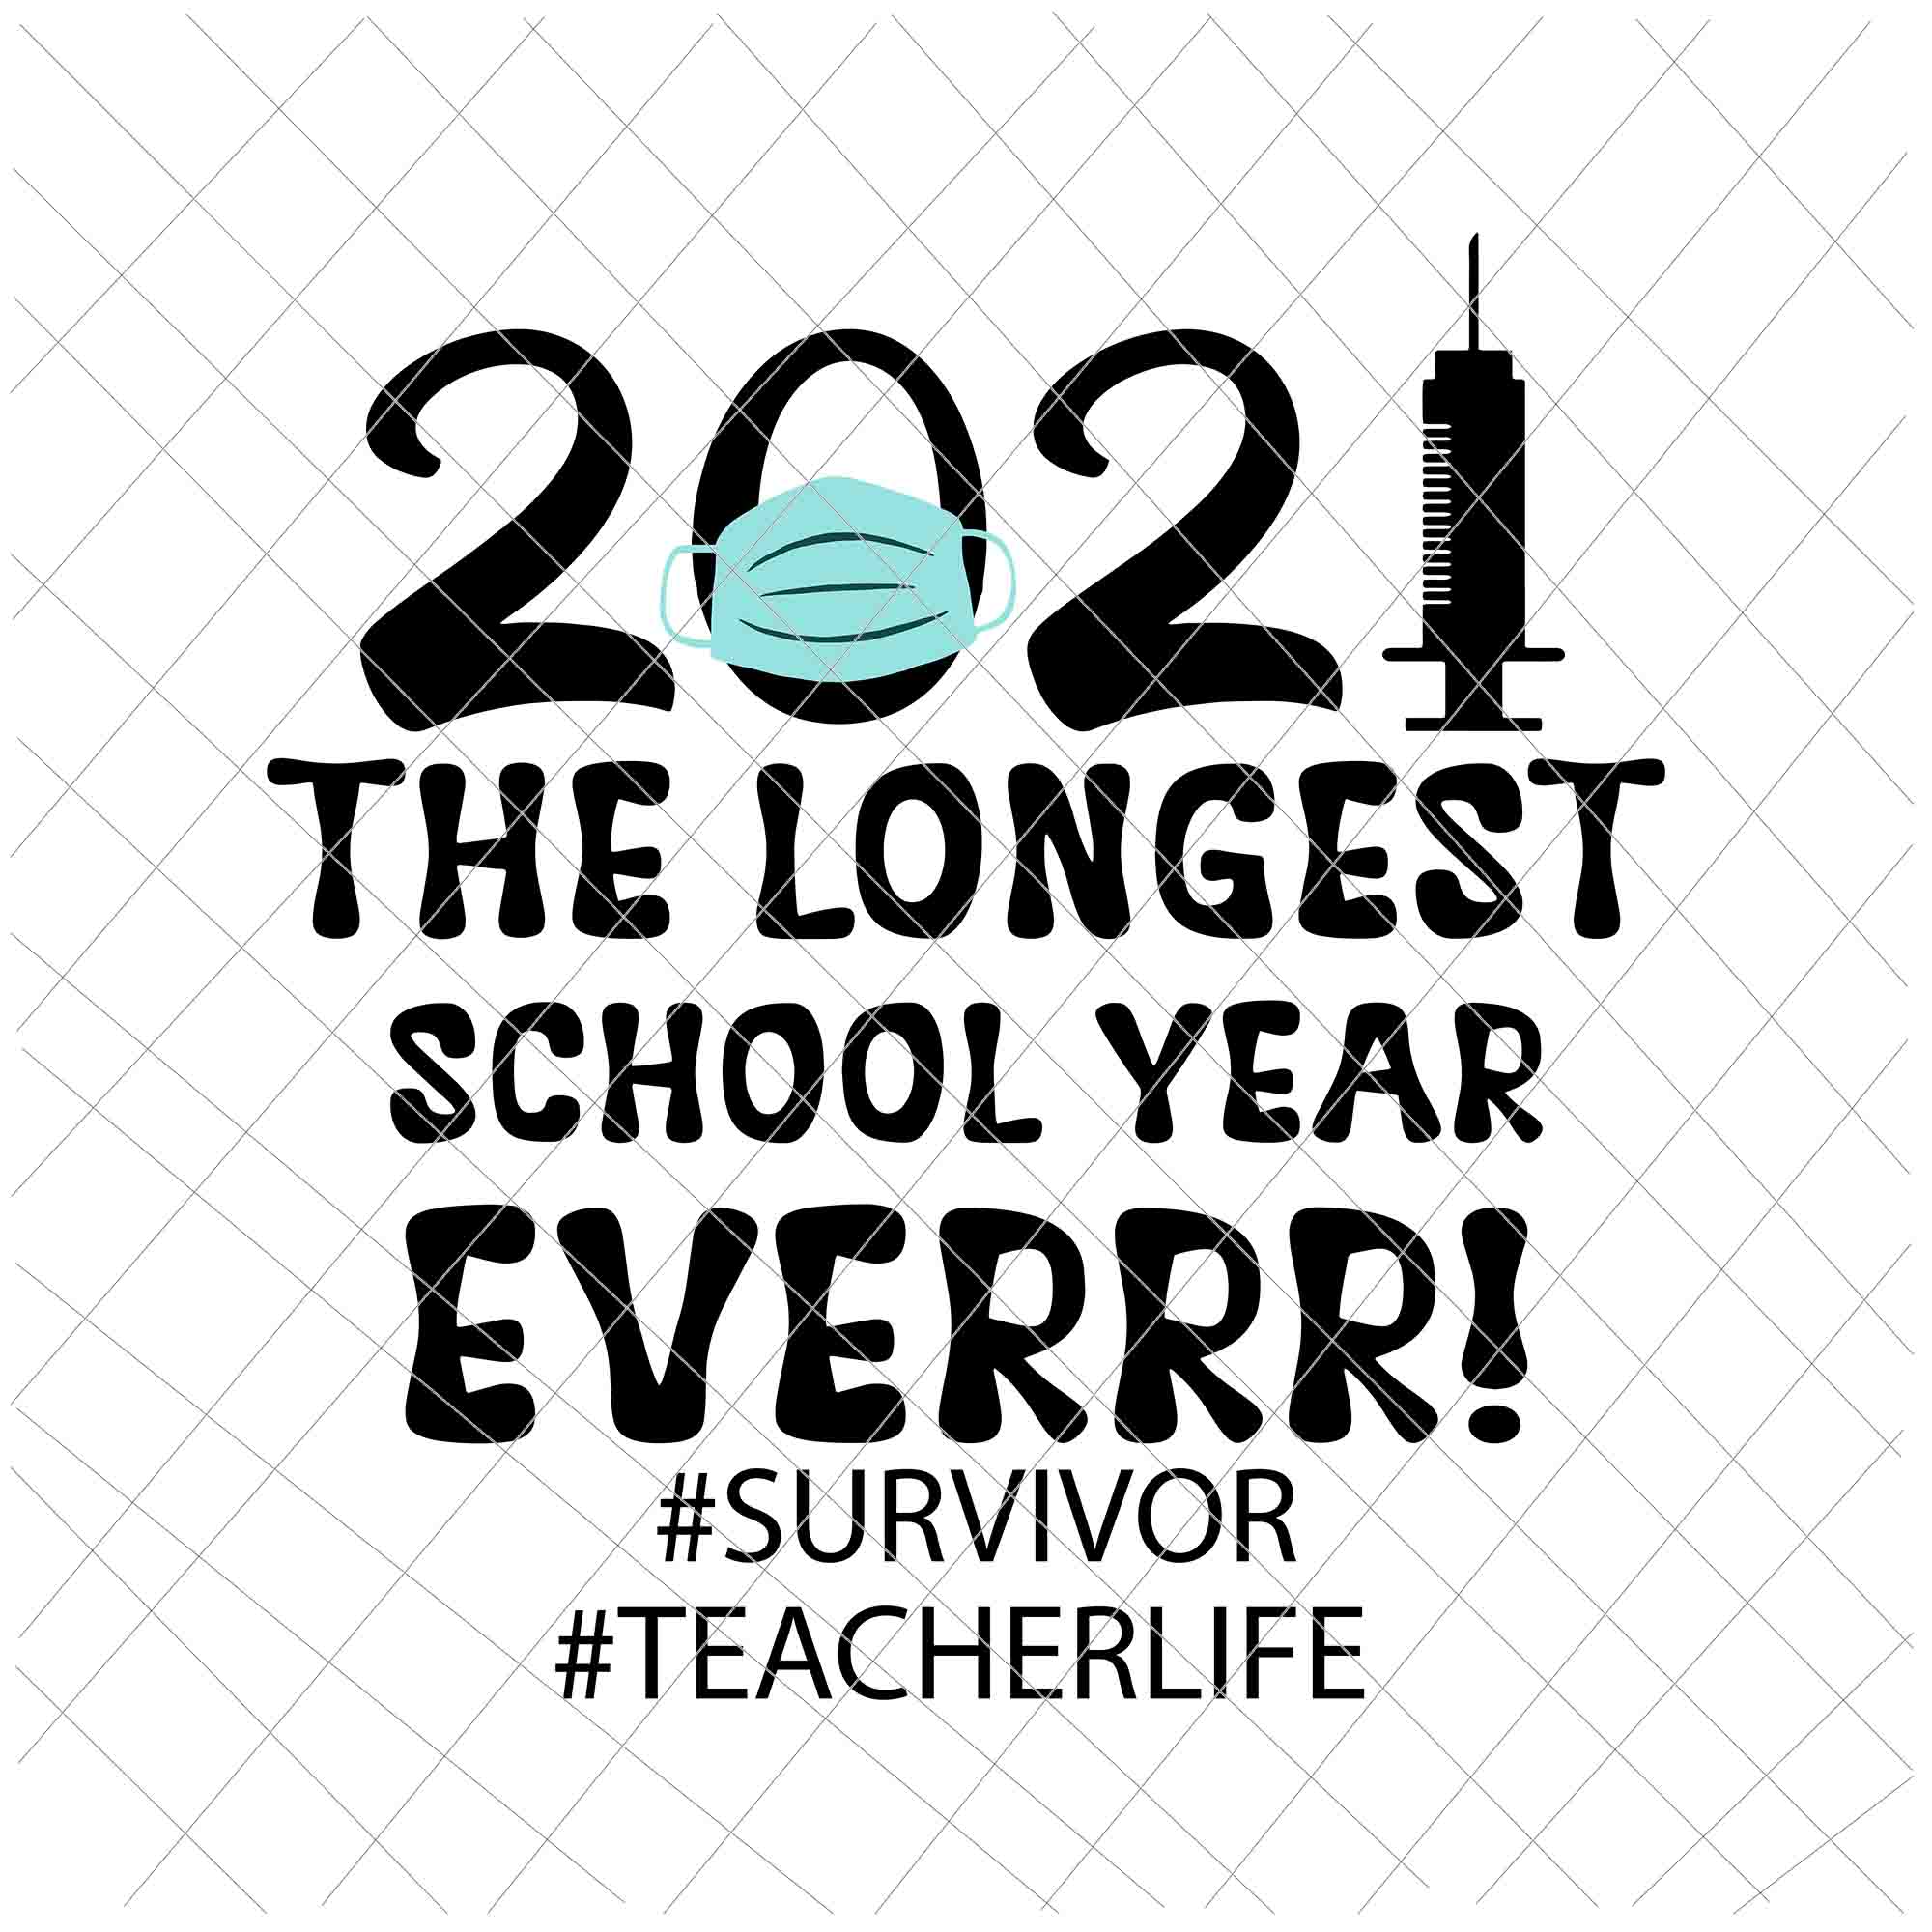 The Longest School Year Ever Svg, Survivor Teacher School Year 2021 Svg, Teacherlife Svg